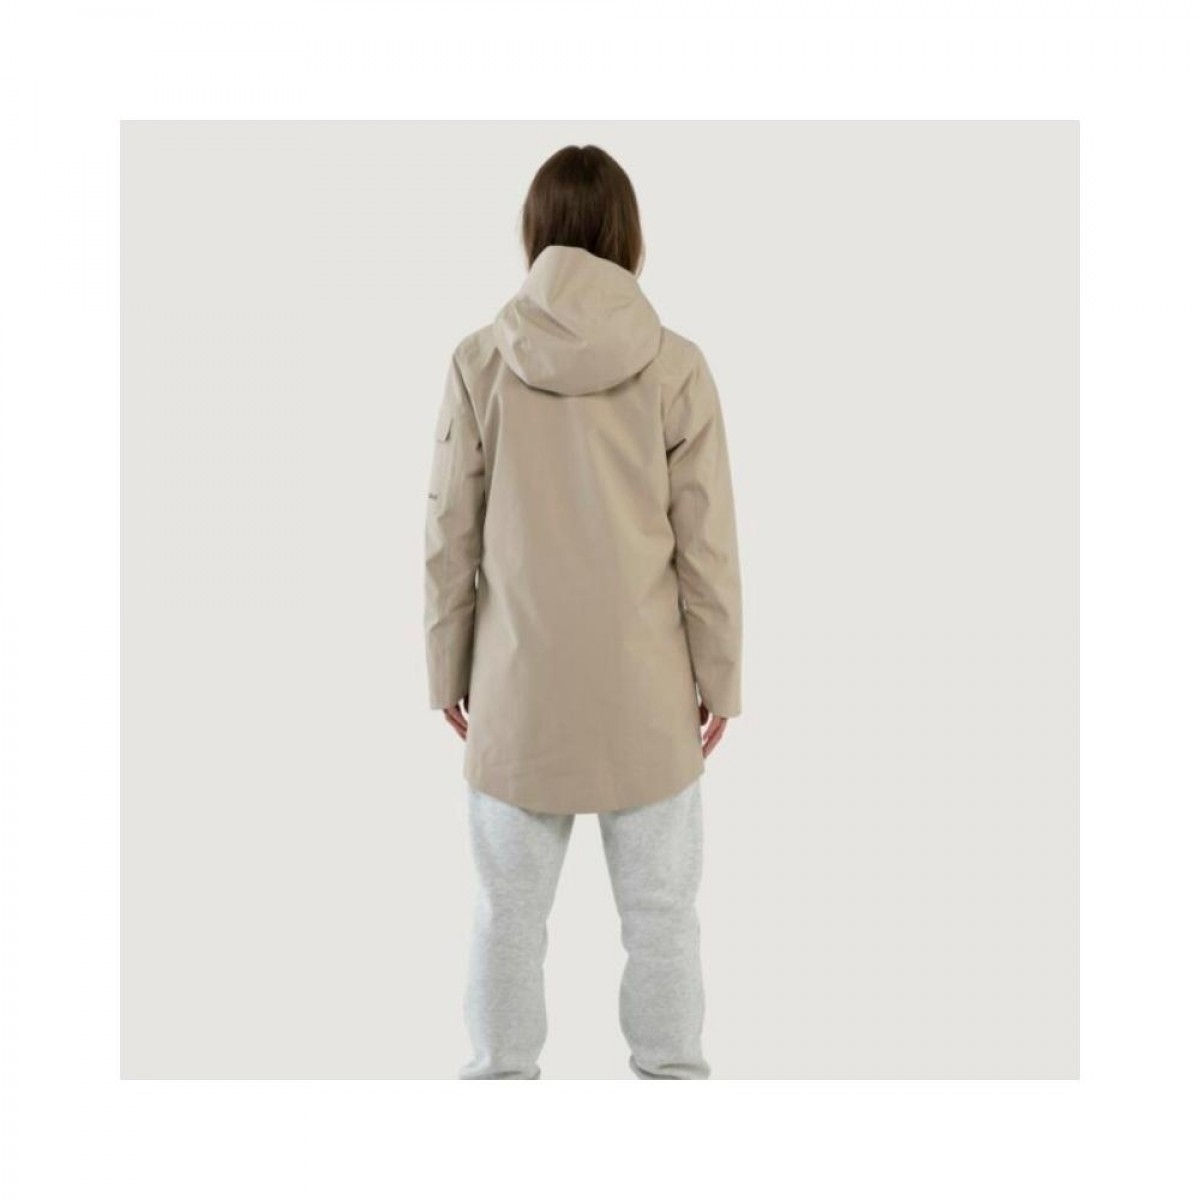 staurneset jacket - beige - model ryg